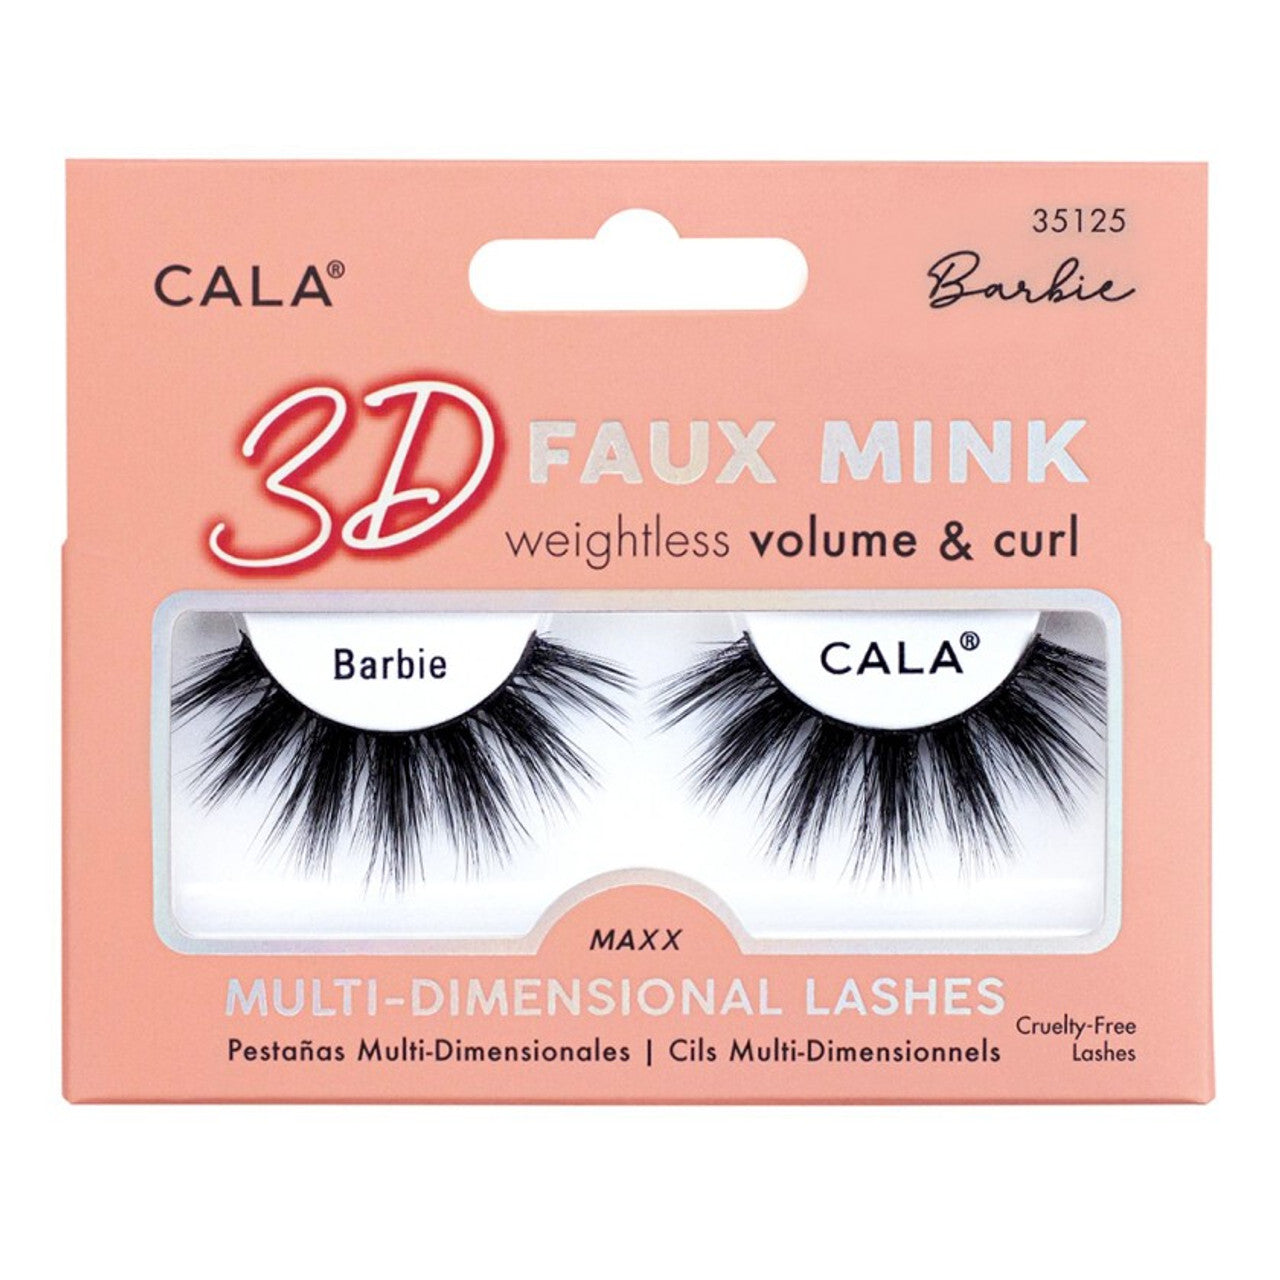 CALA 3D Faux Mink Eyelash Barbie